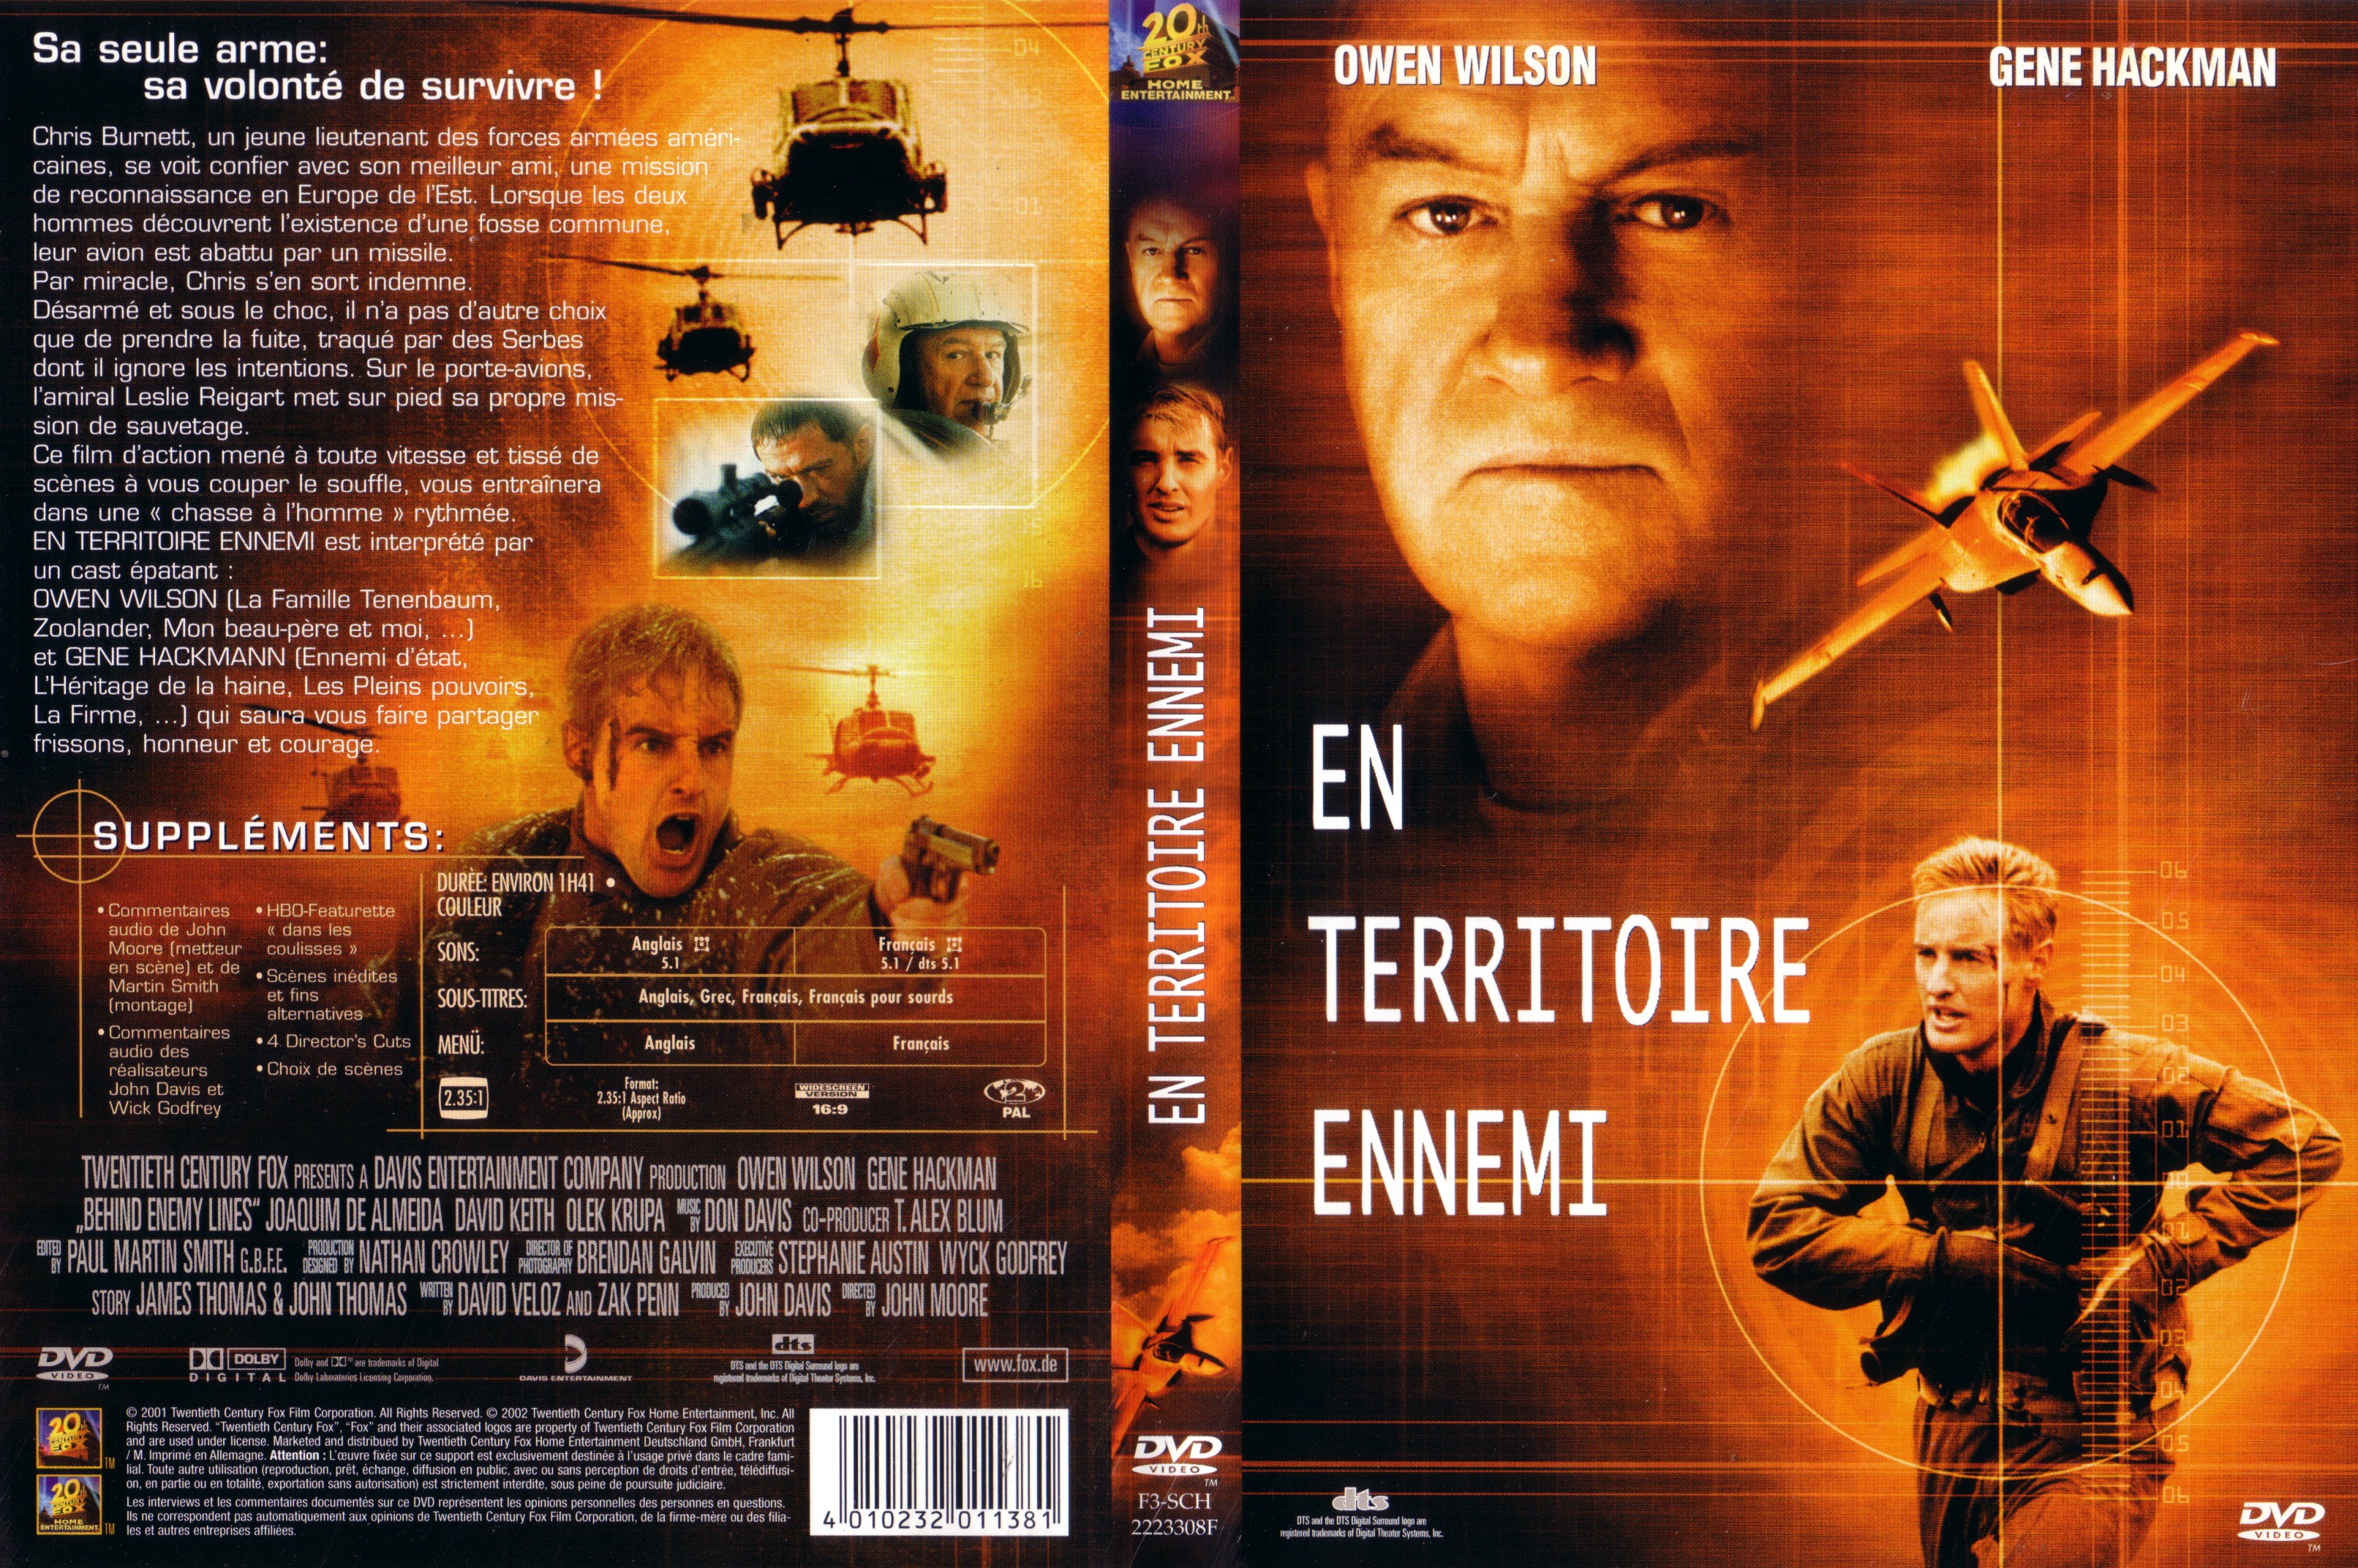 Jaquette DVD En territoire ennemi v4